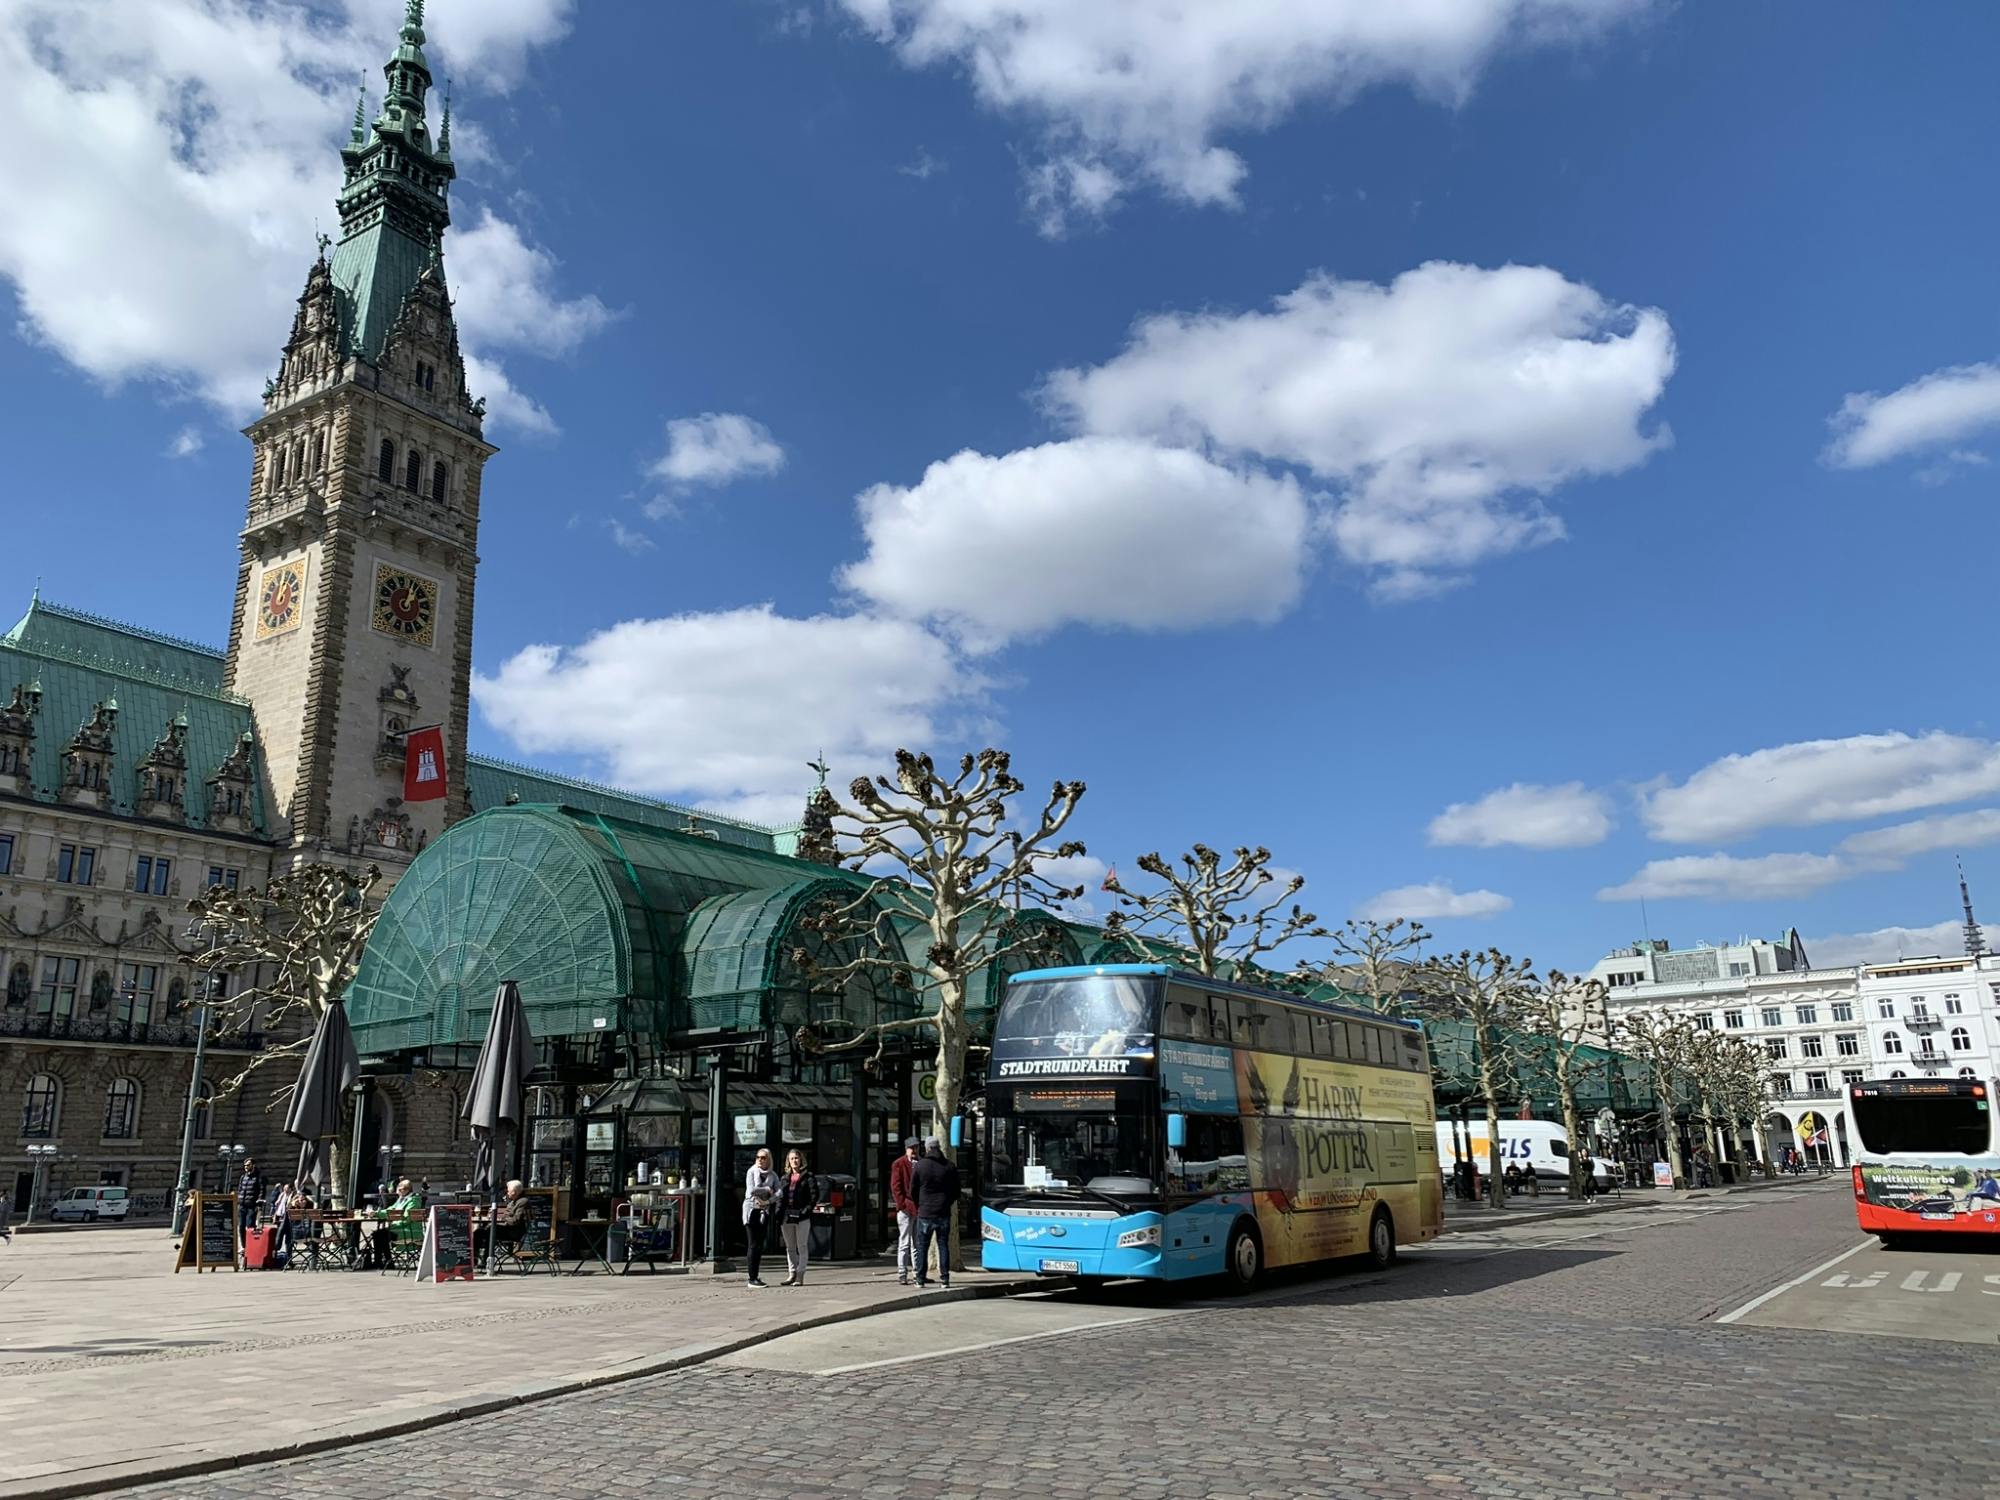 Wycieczka autobusowa po Hamburgu typu hop-on hop-off